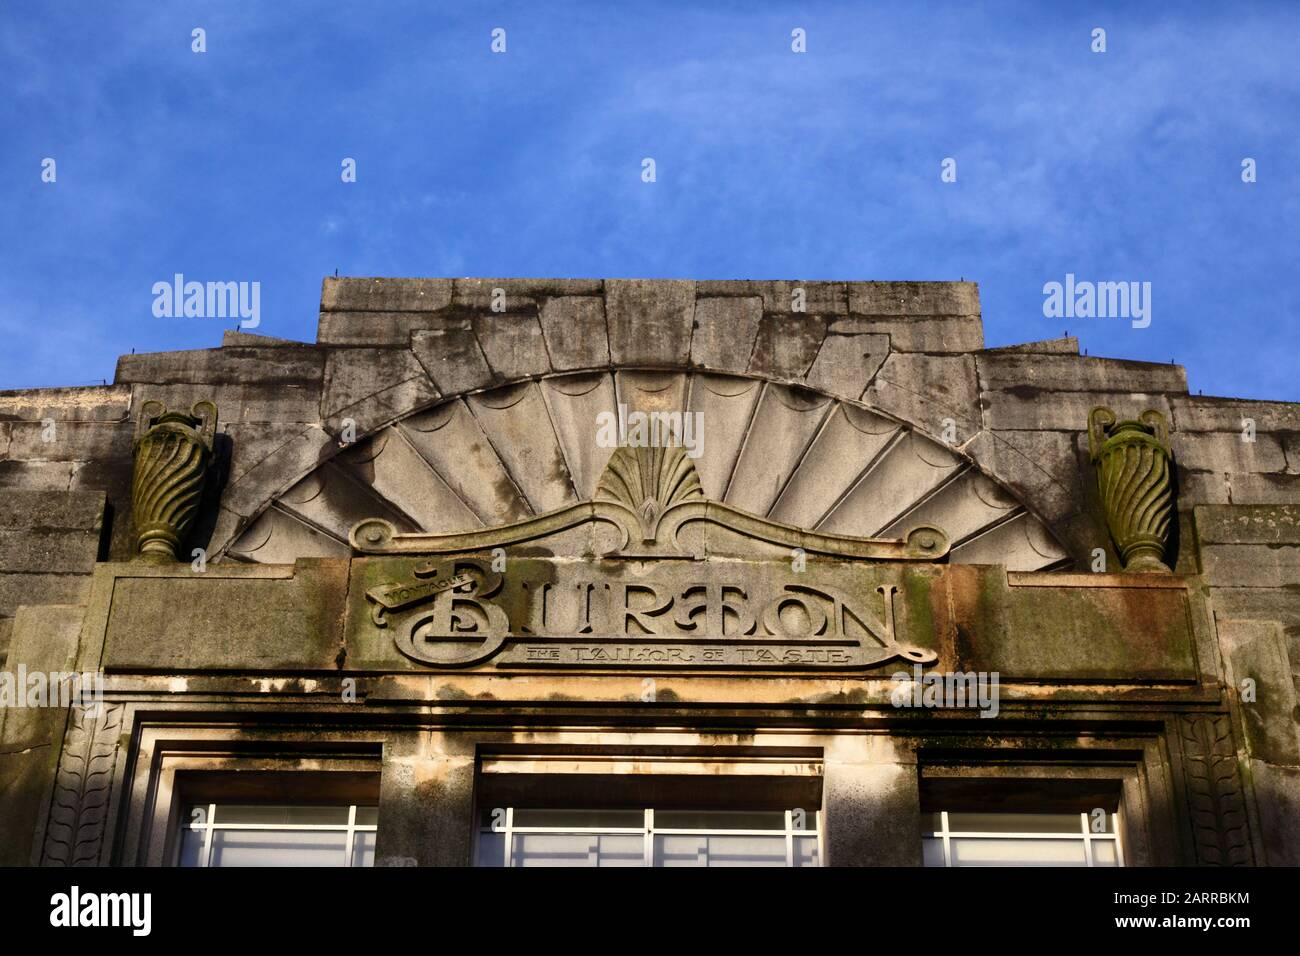 Detail of upper part of facade of former Burton clothes shop, Calverley Road, Tunbridge Wells, Kent, England Stock Photo